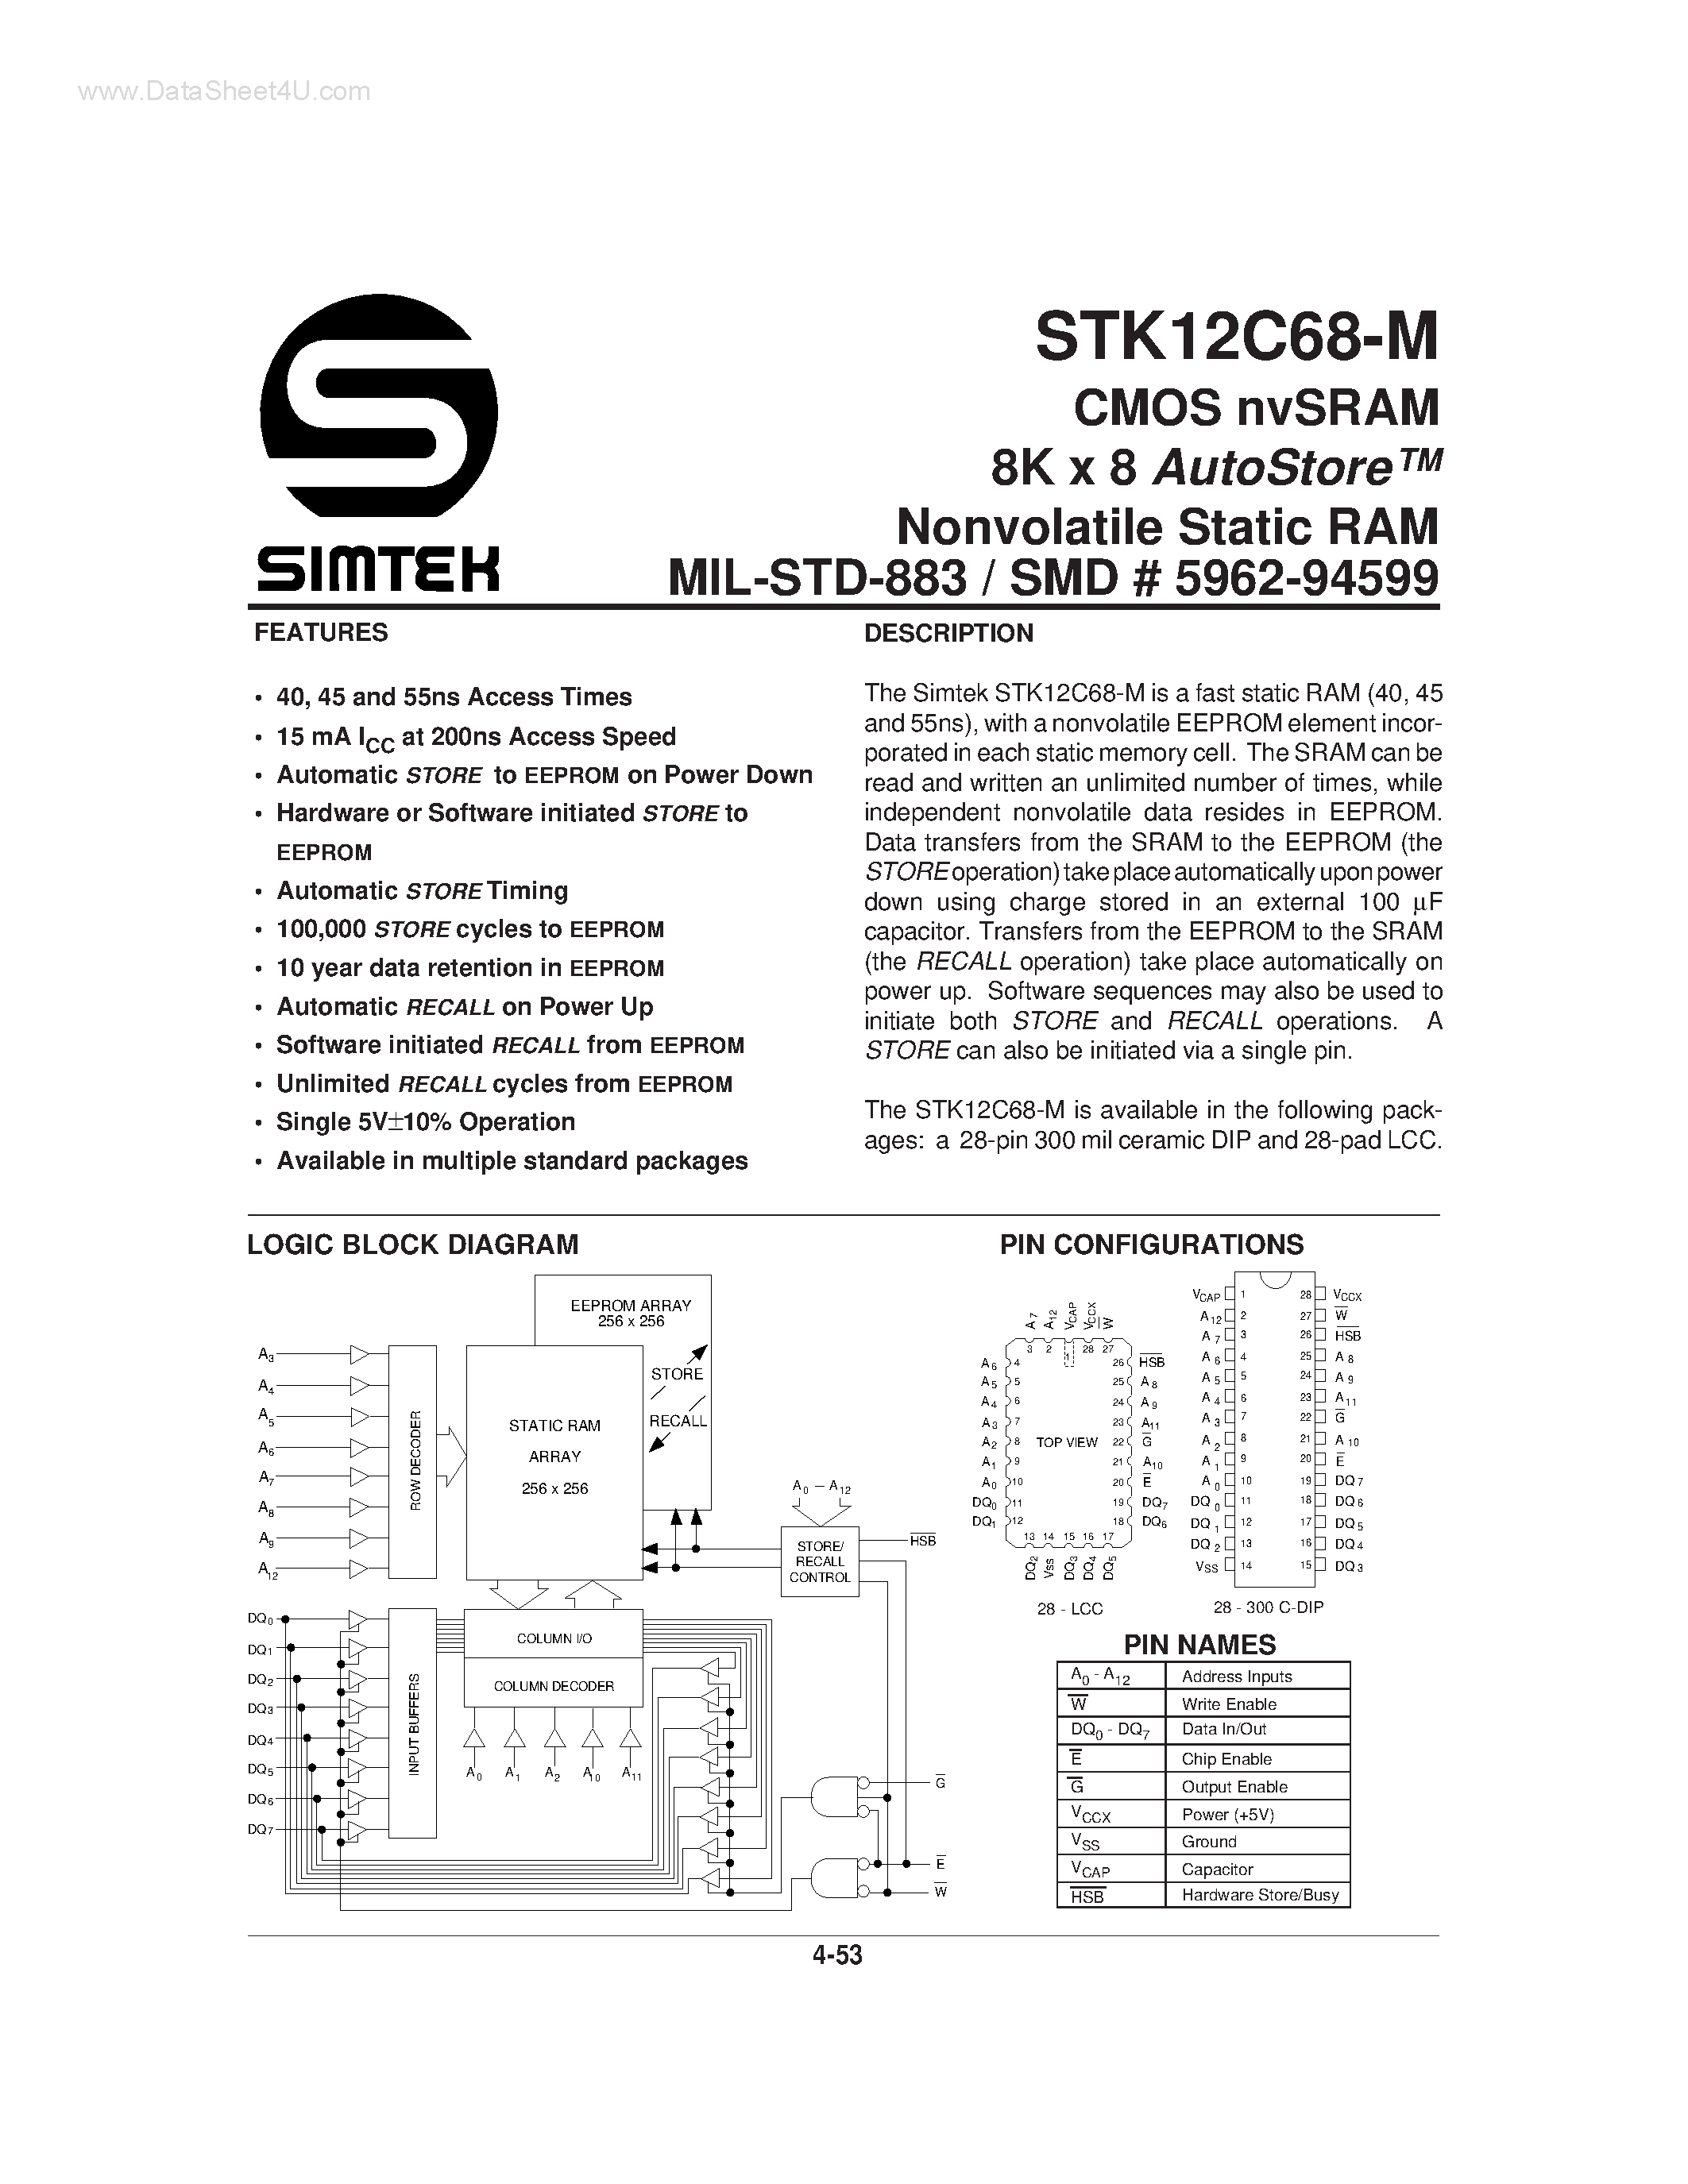 Даташит STK12C68-M - CMOS NV SRAM 8K X 8 AUTOSTORE NONVOLATILE STATIC RAM страница 1